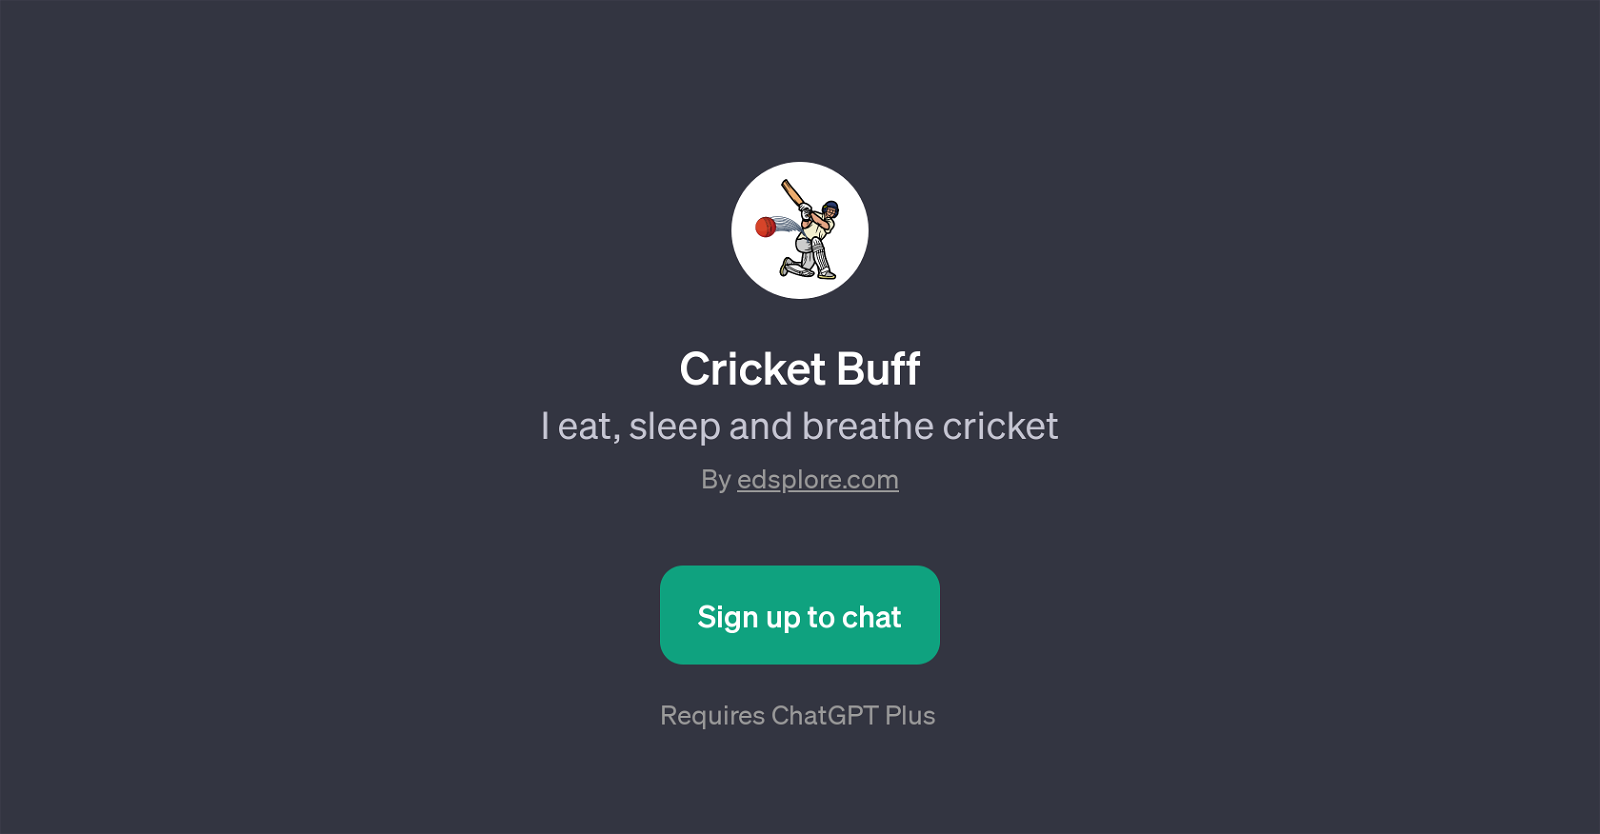 Cricket Buff website